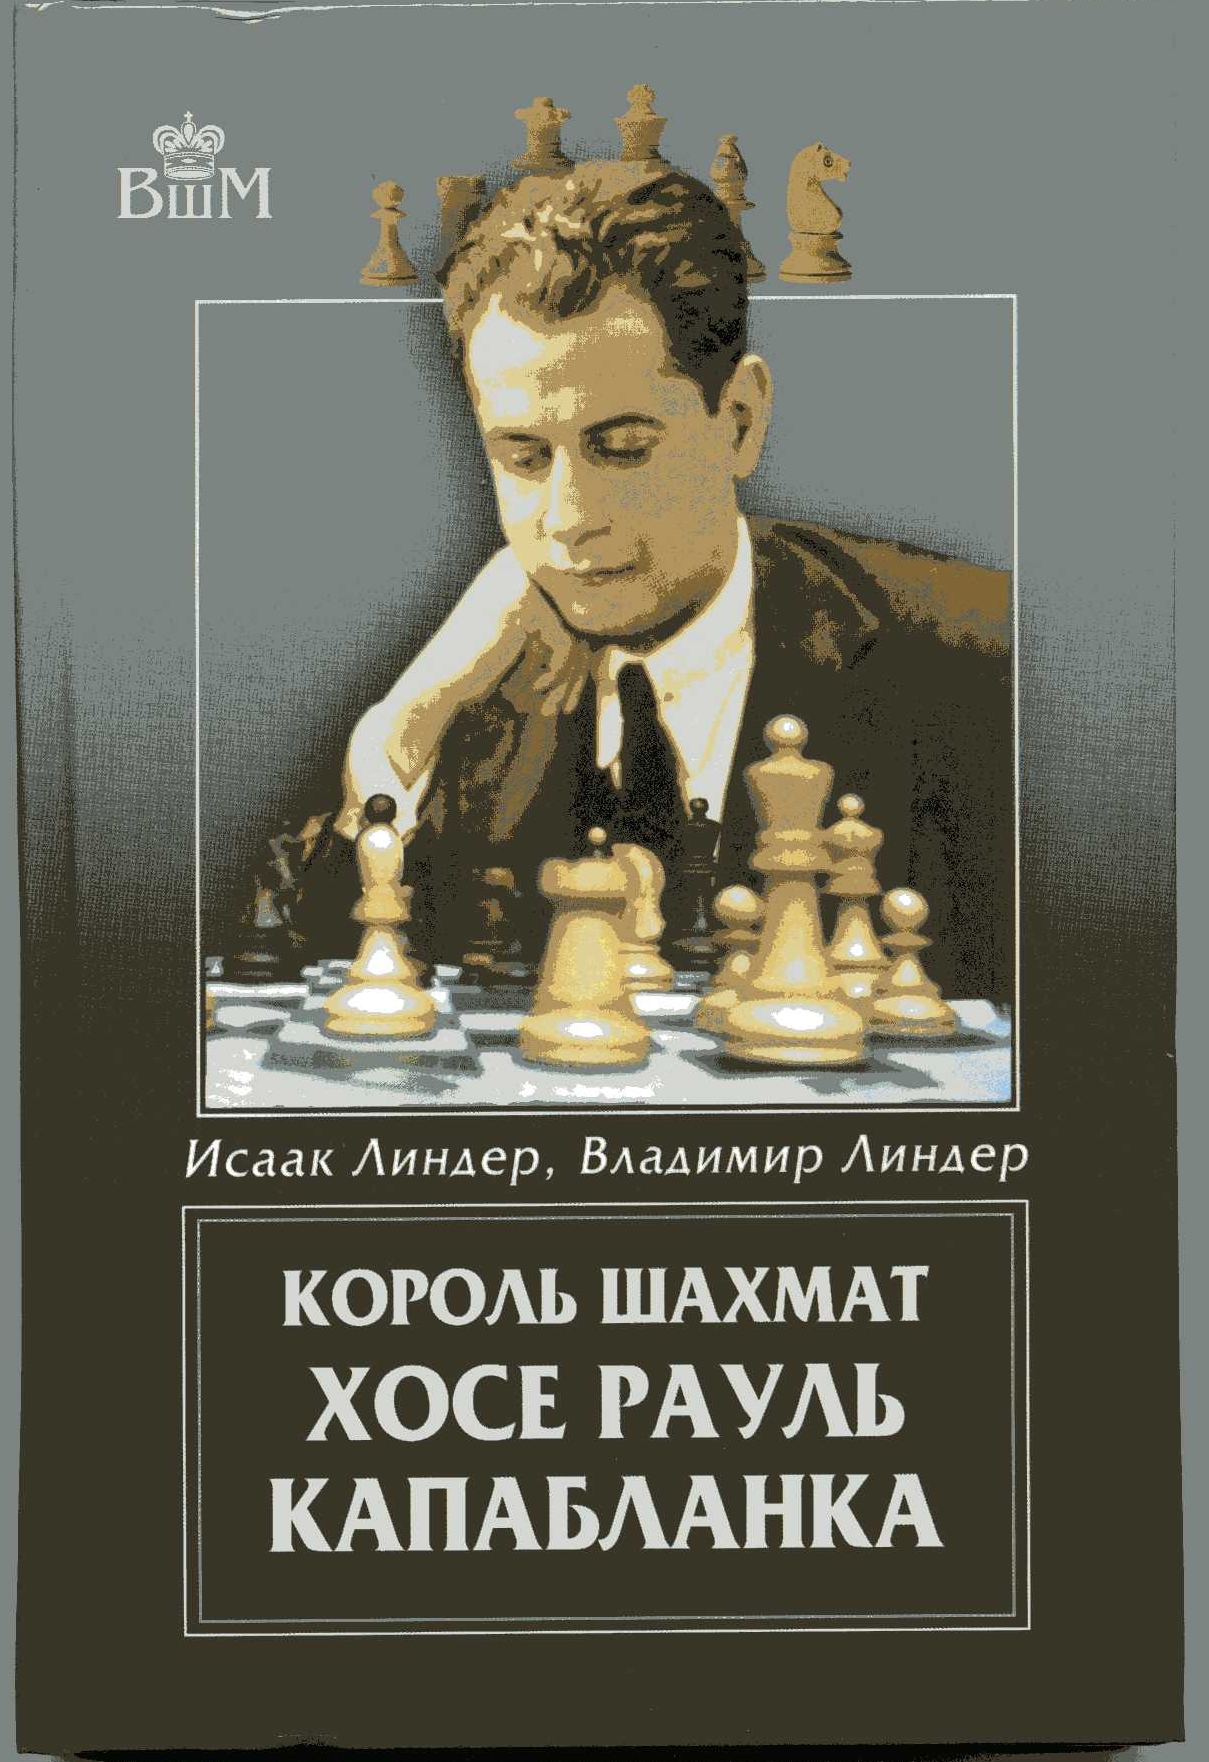 Play Like a World Champion : José Raúl Capablanca (Paperback) 